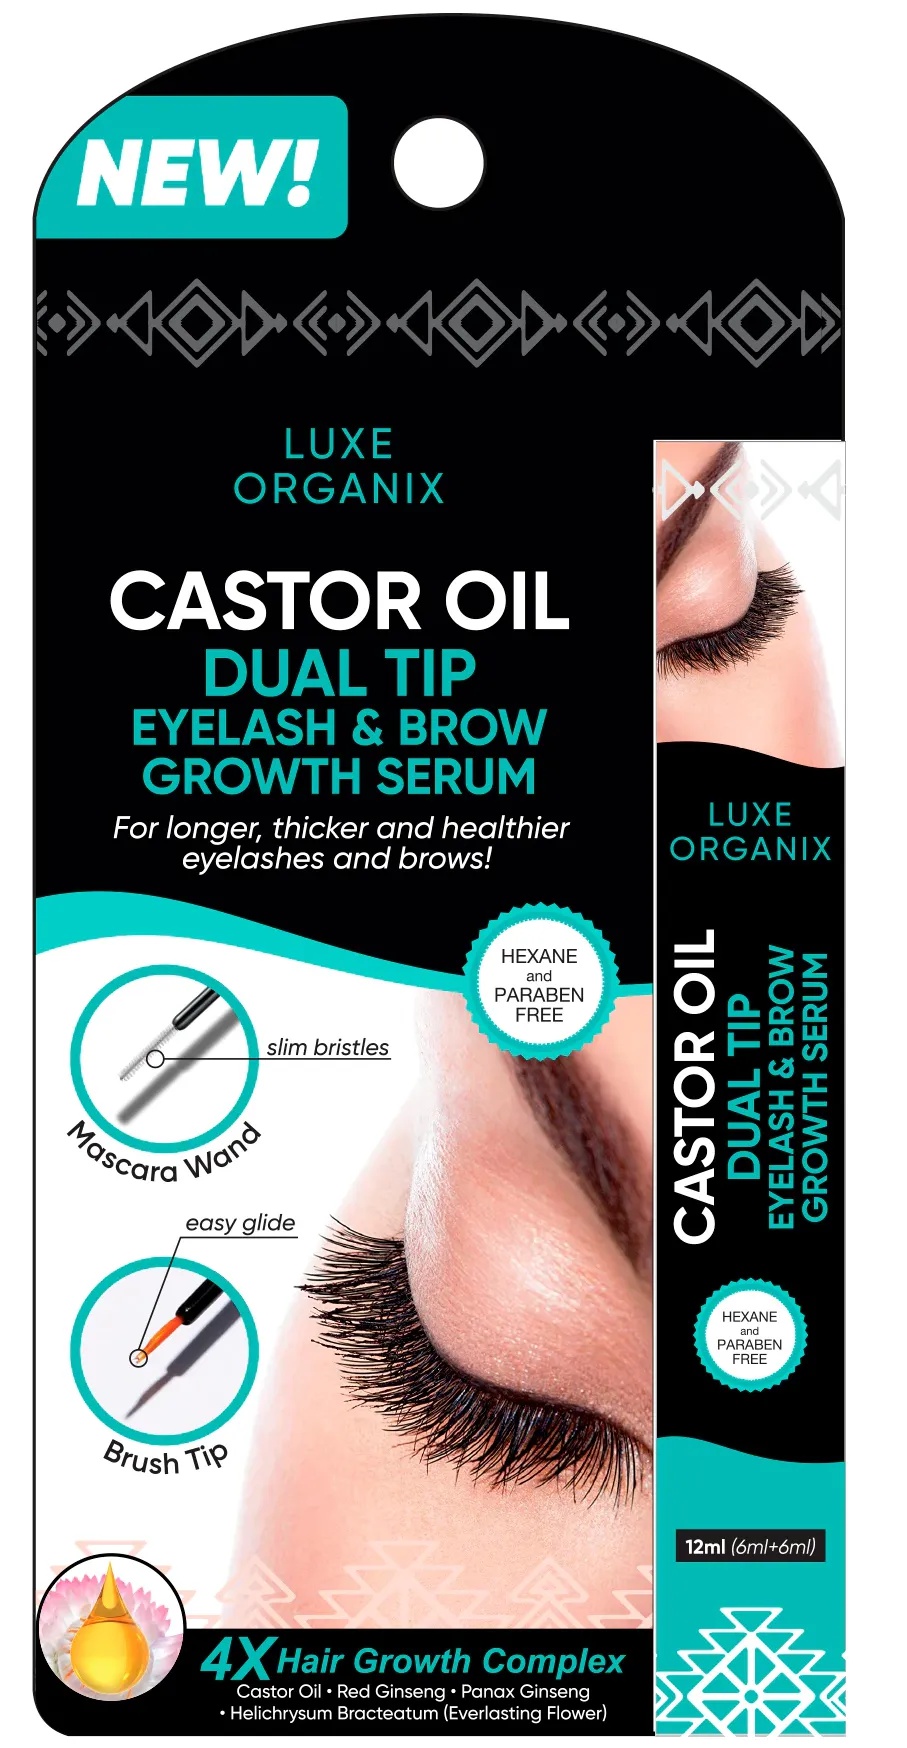 Luxe Organix Castor Oil Dual Tip Eyelash & Brow Growth Serum